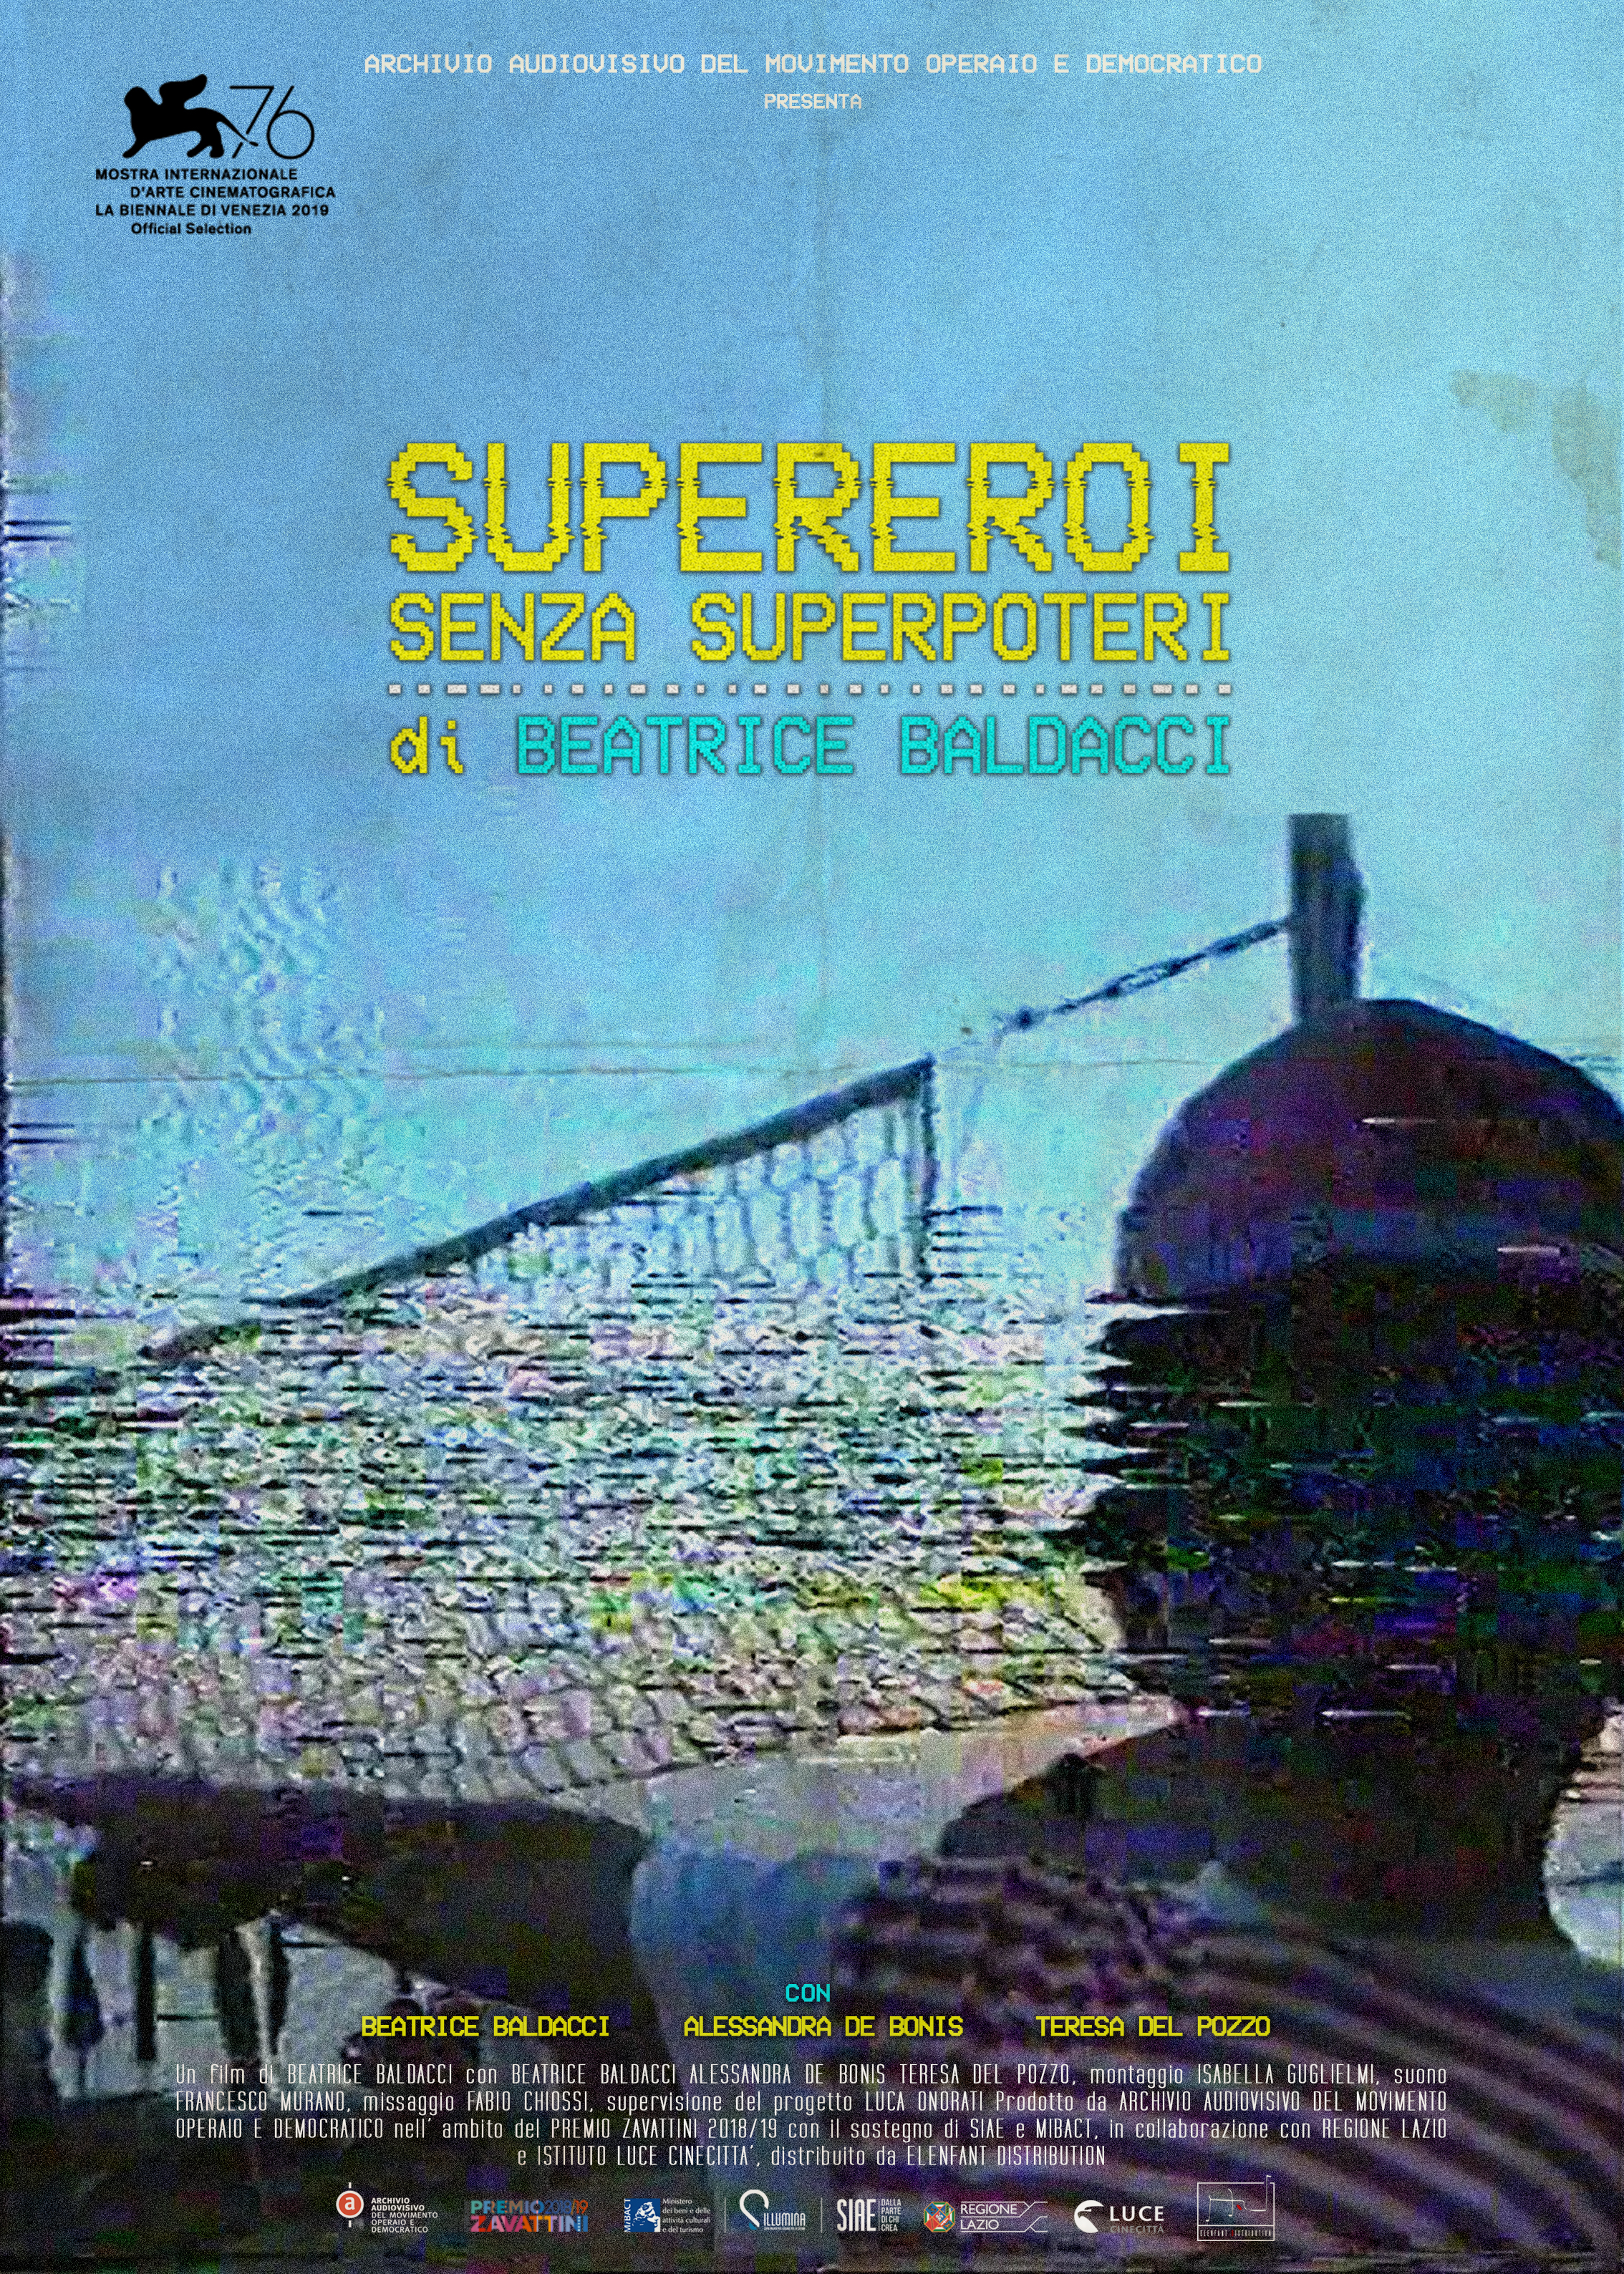 Supereroi senza superpoteri <h3 style="font-size:10px; line-height:20px;">di Beatrice Baldacci</h3>